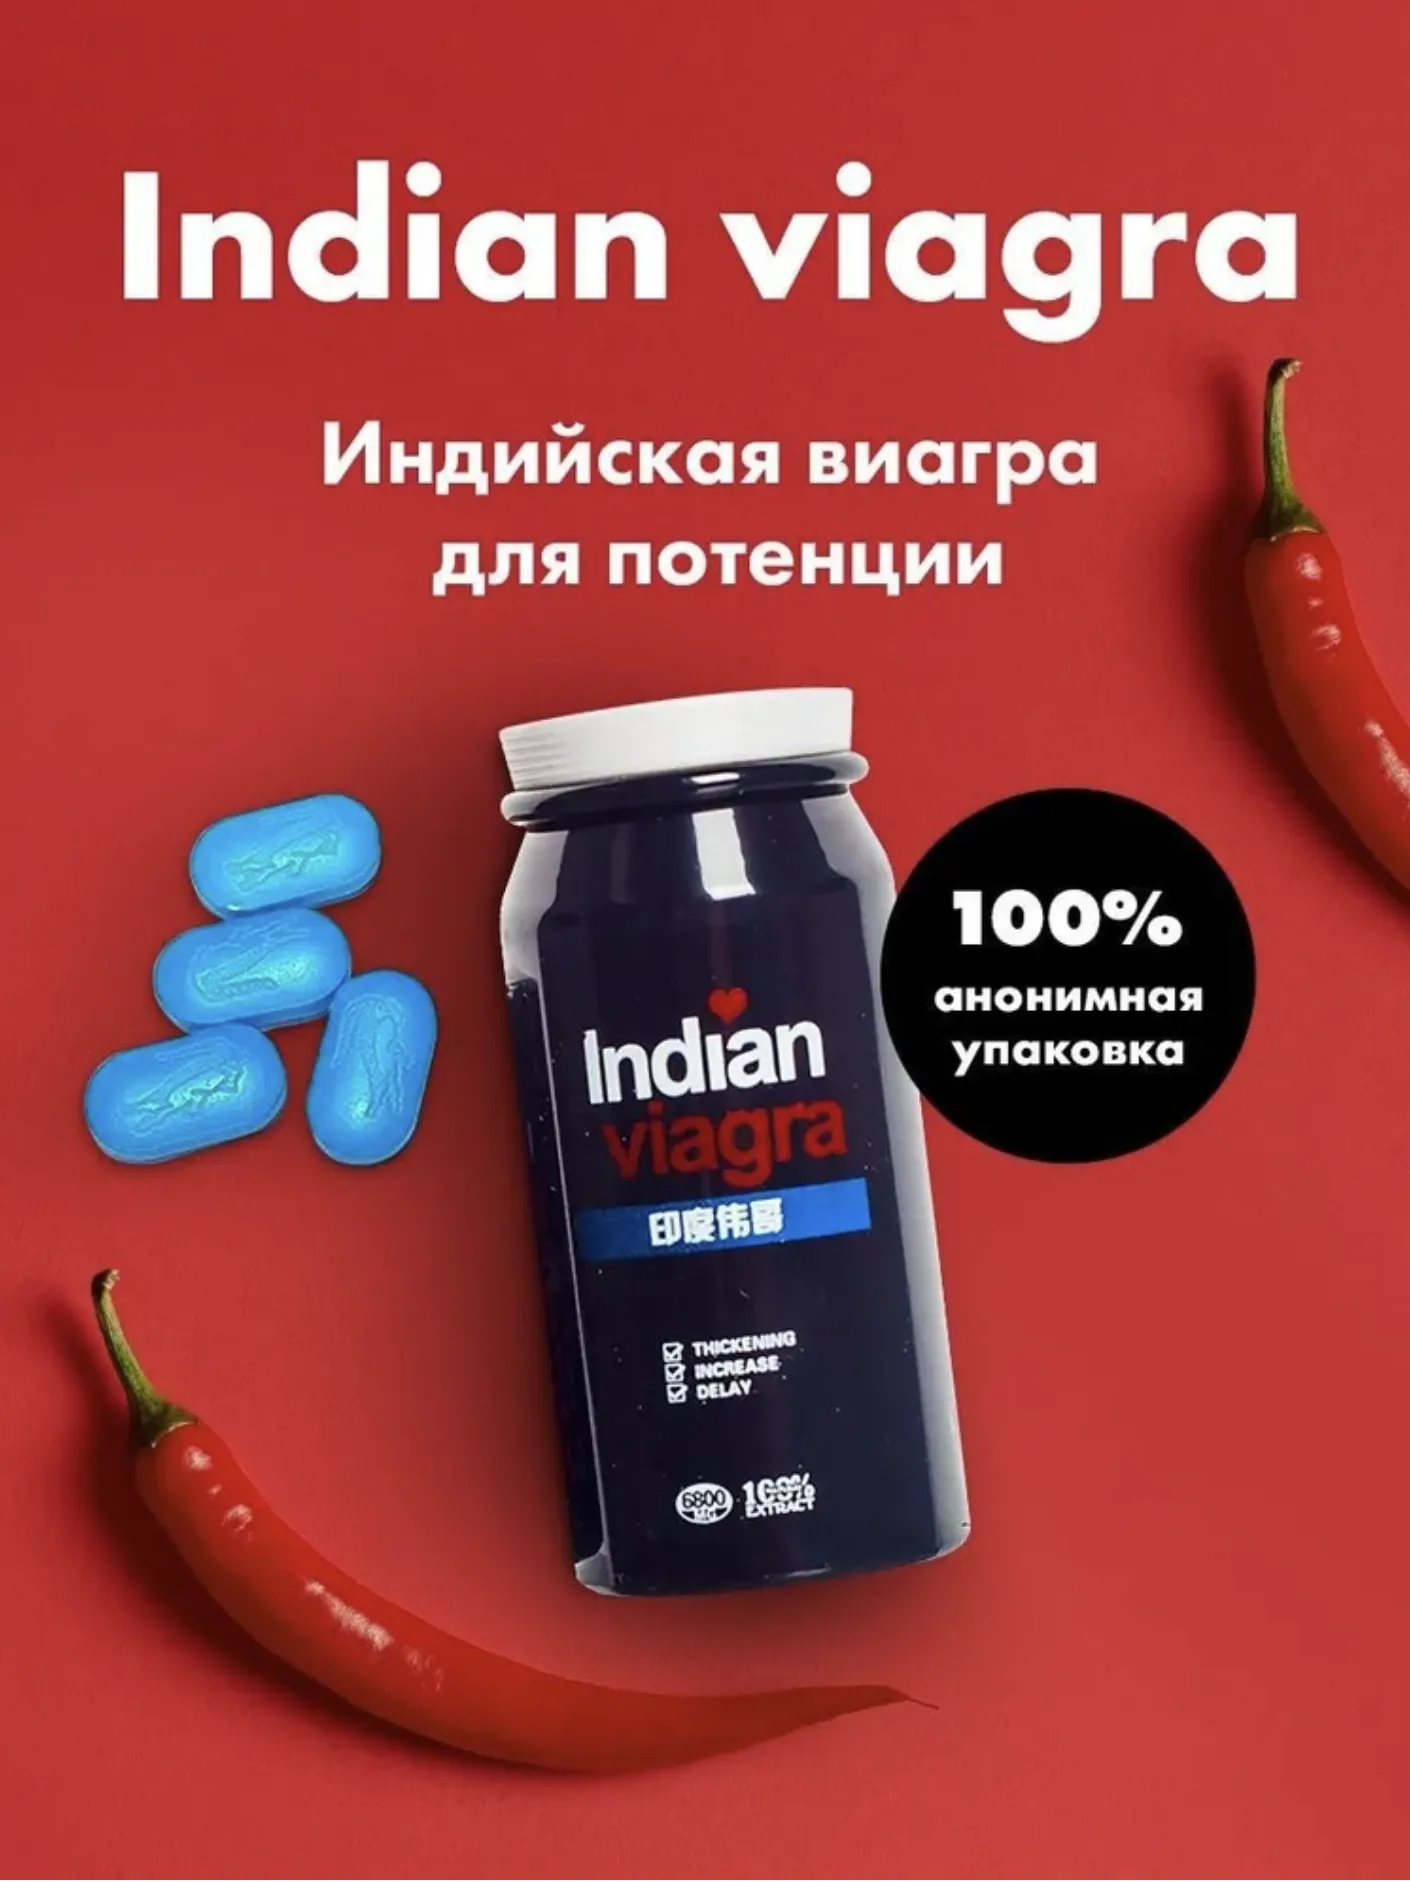 "Hind Viagra"potentsiali uchun vosita#2